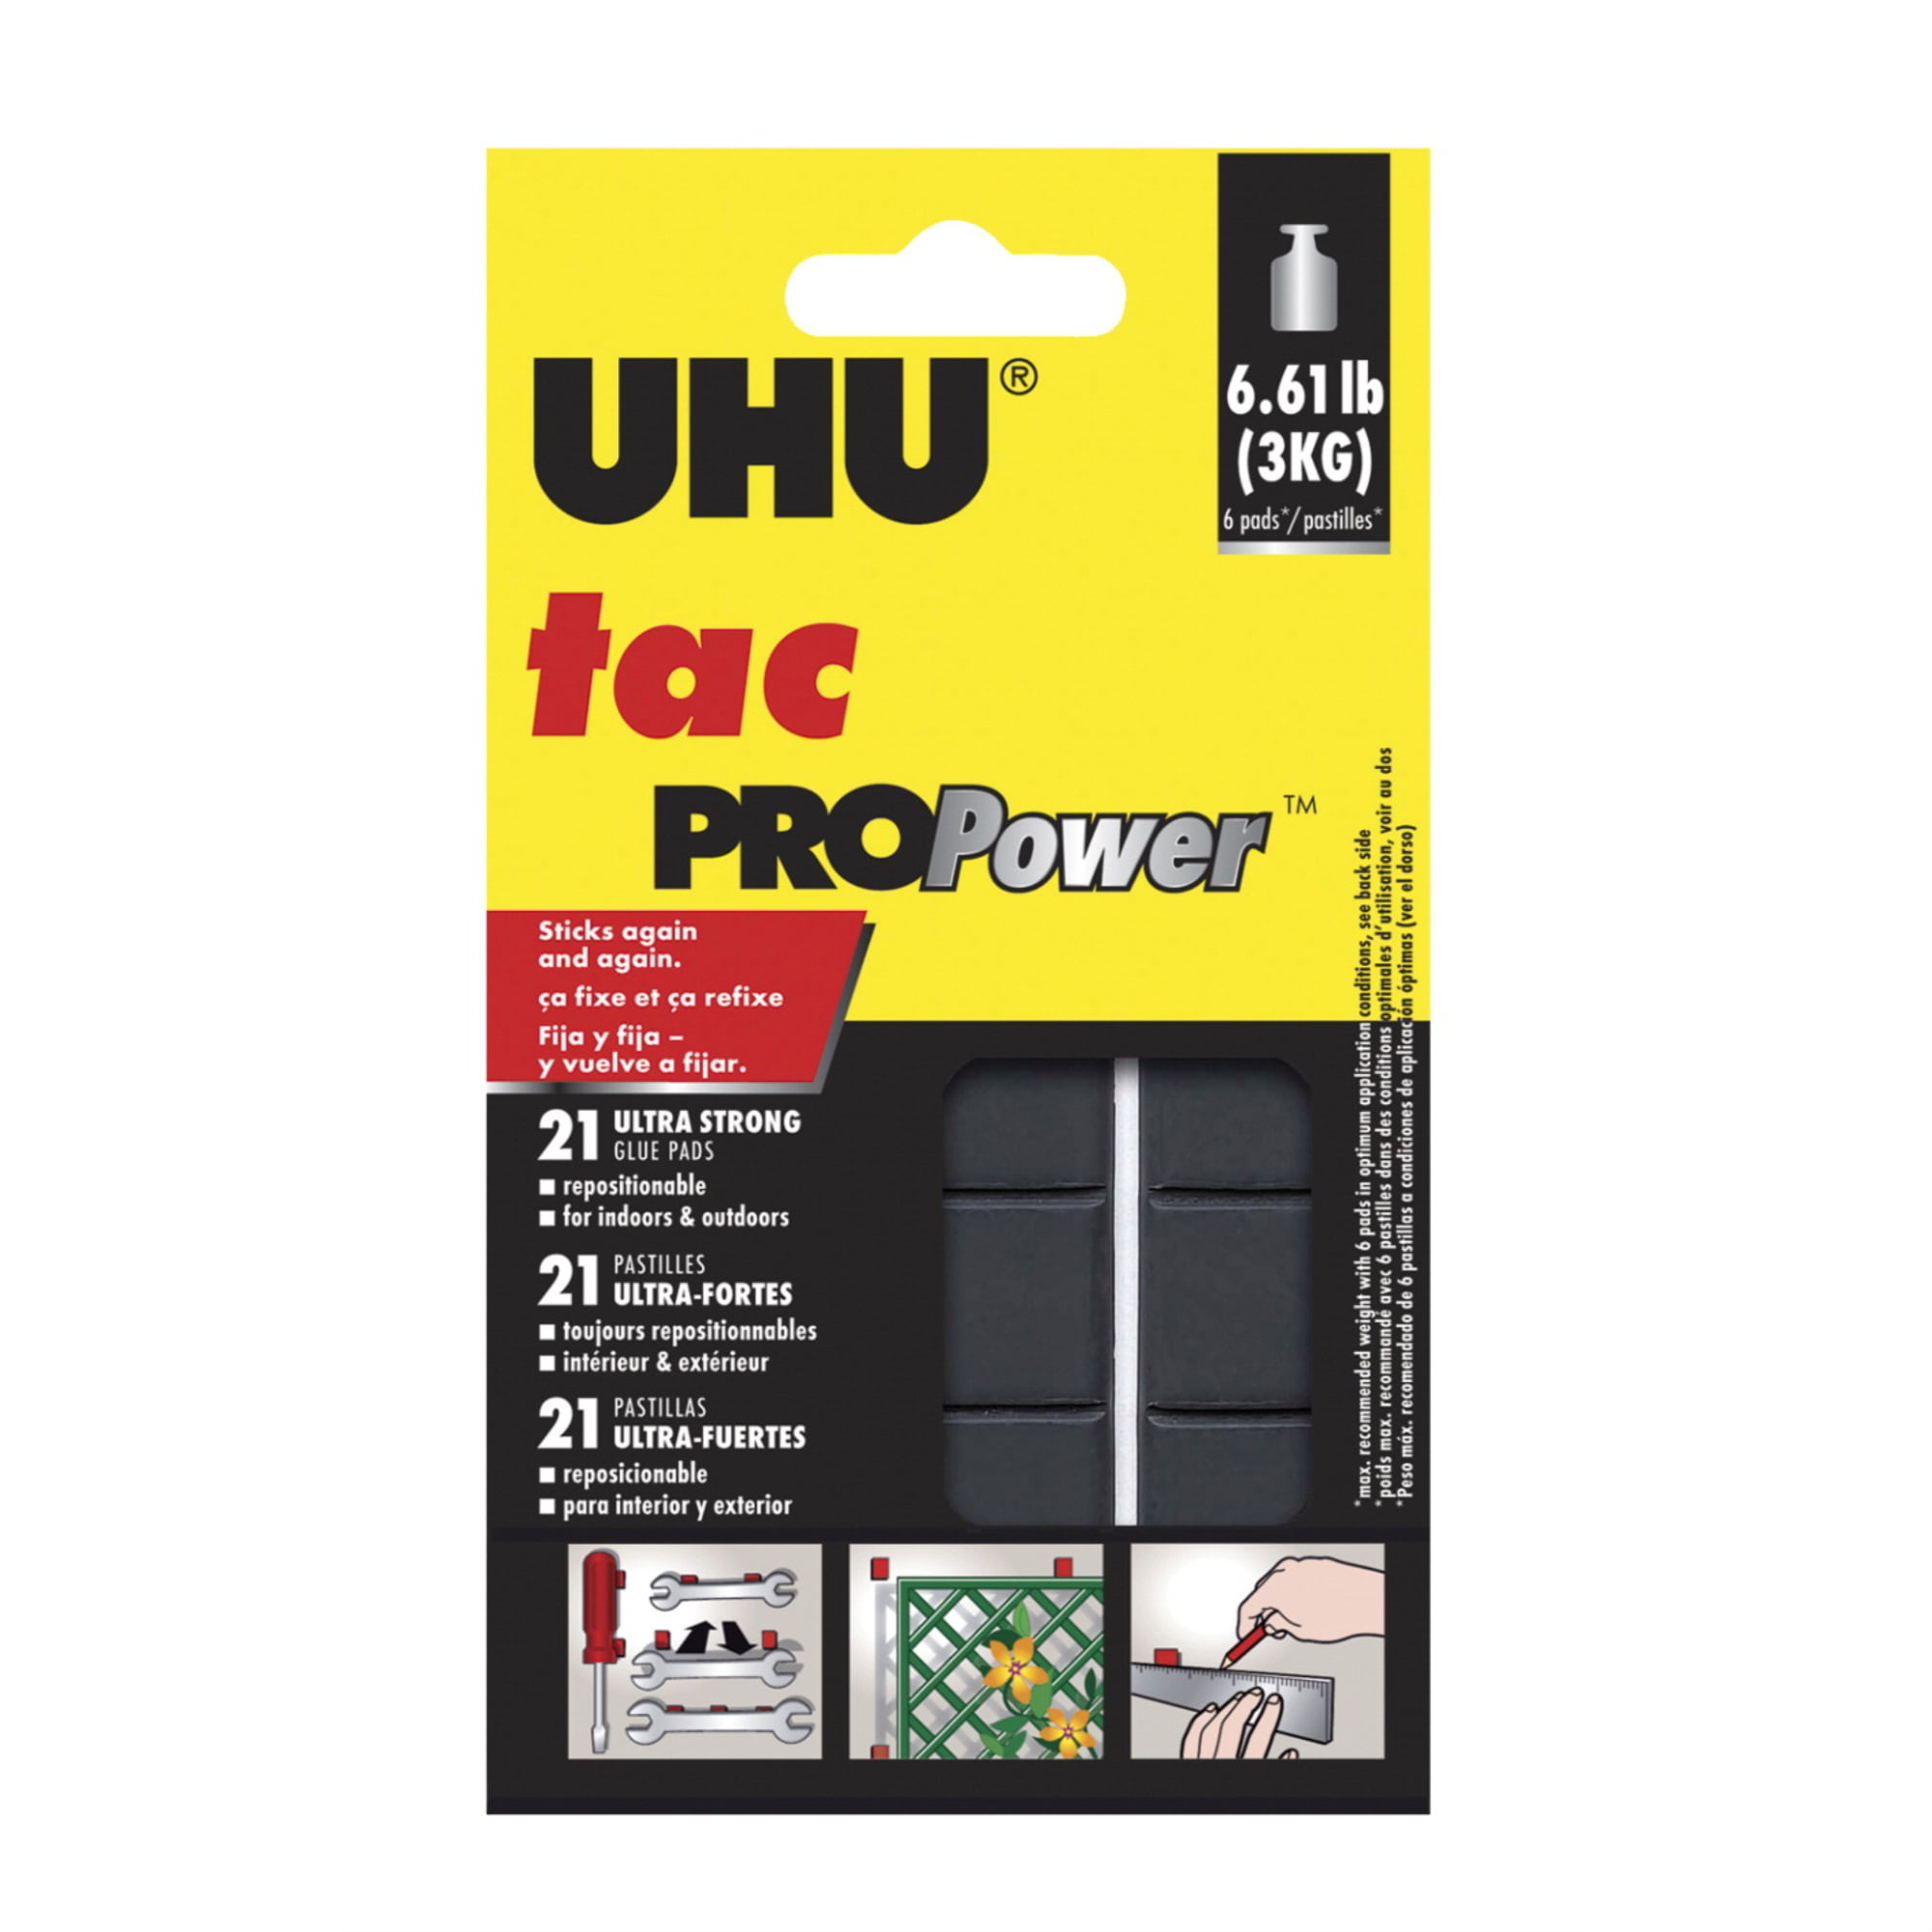 Pack of 6 UHU White Tack 100g